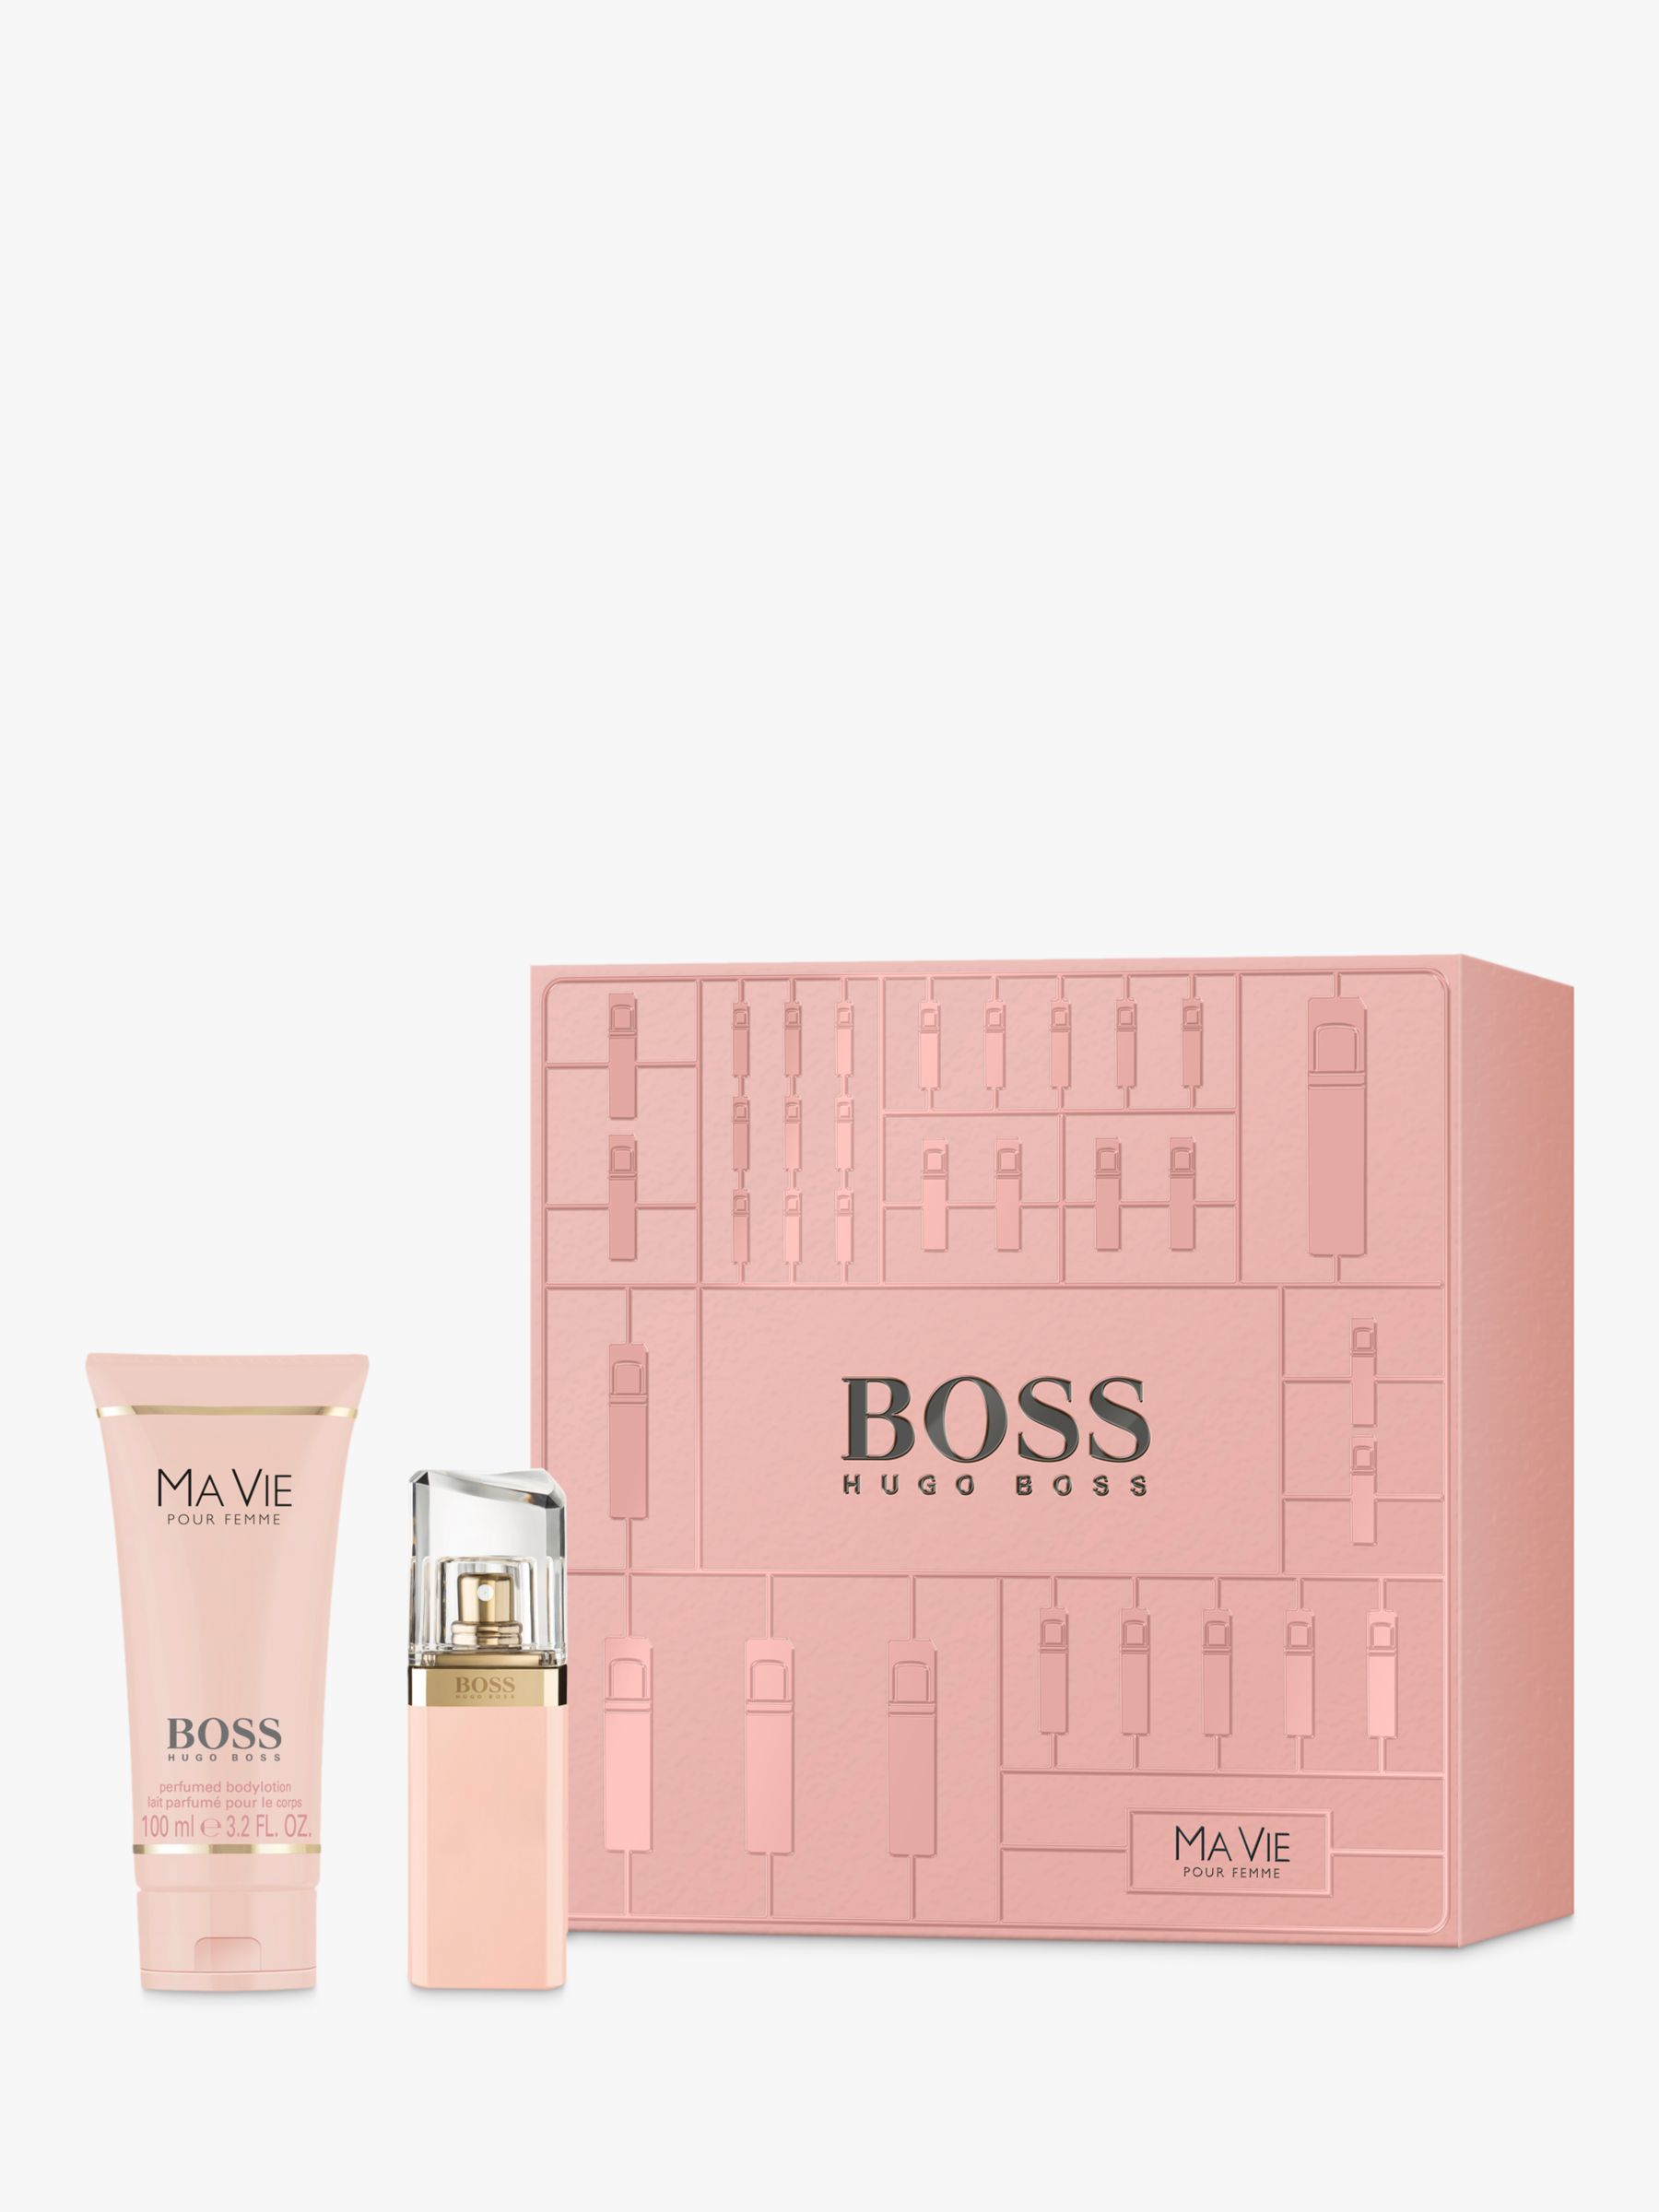 HUGO BOSS BOSS Ma Vie Eau de Parfum 30ml Fragrance Gift Set